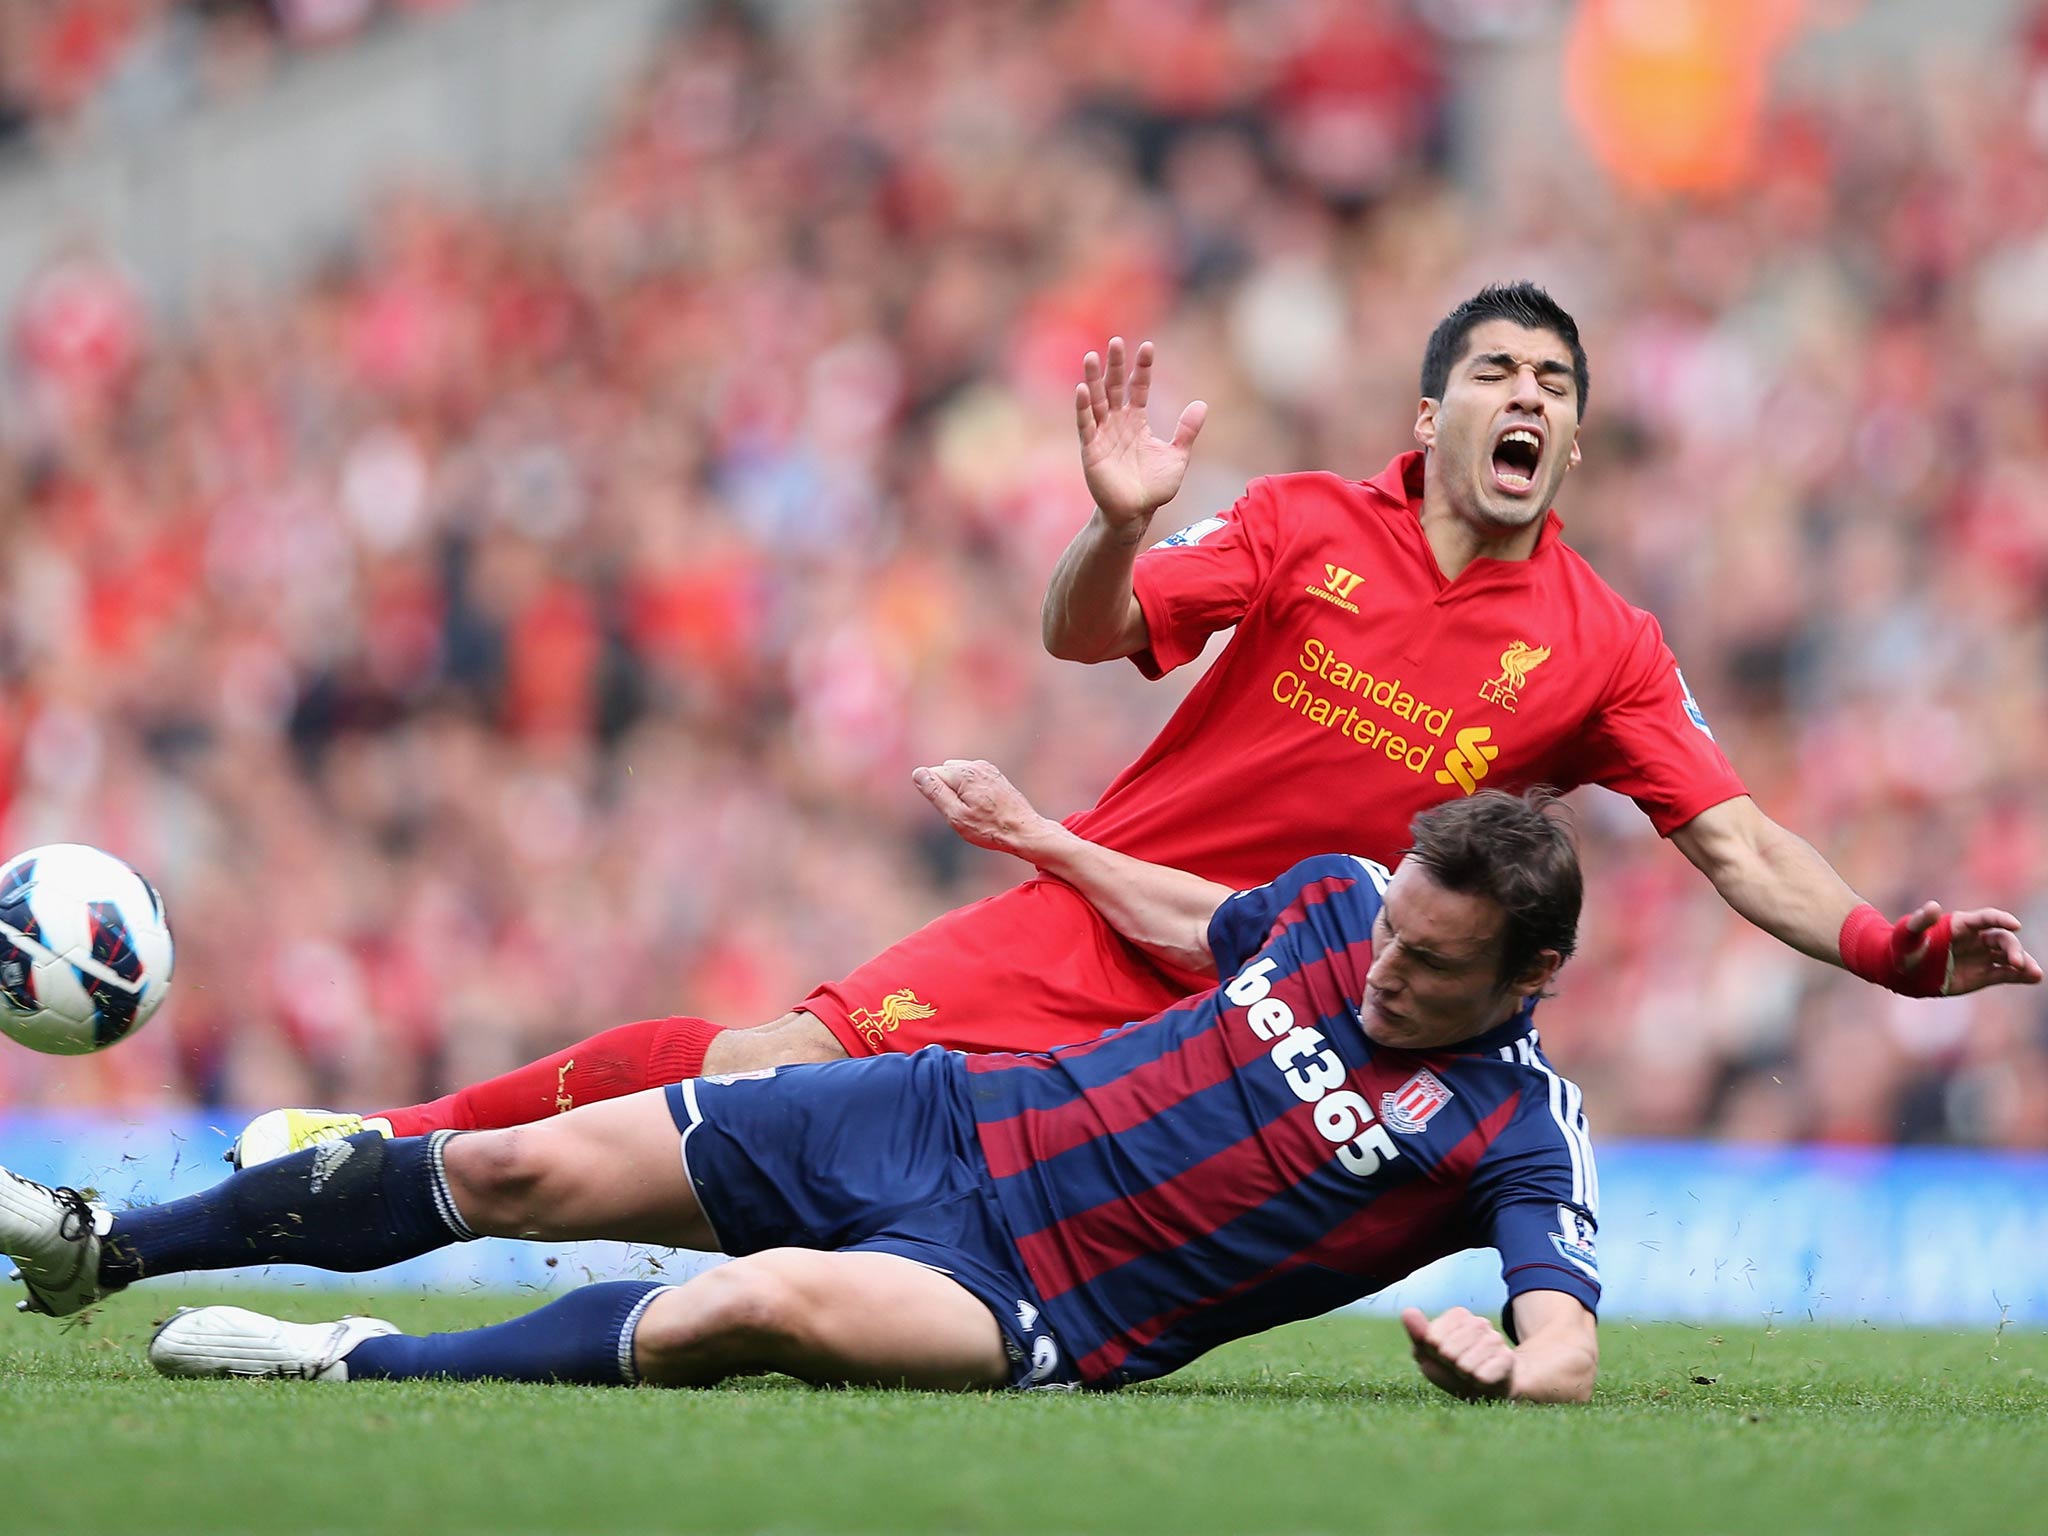 Liverpool striker Luis Suarez in action against Stoke